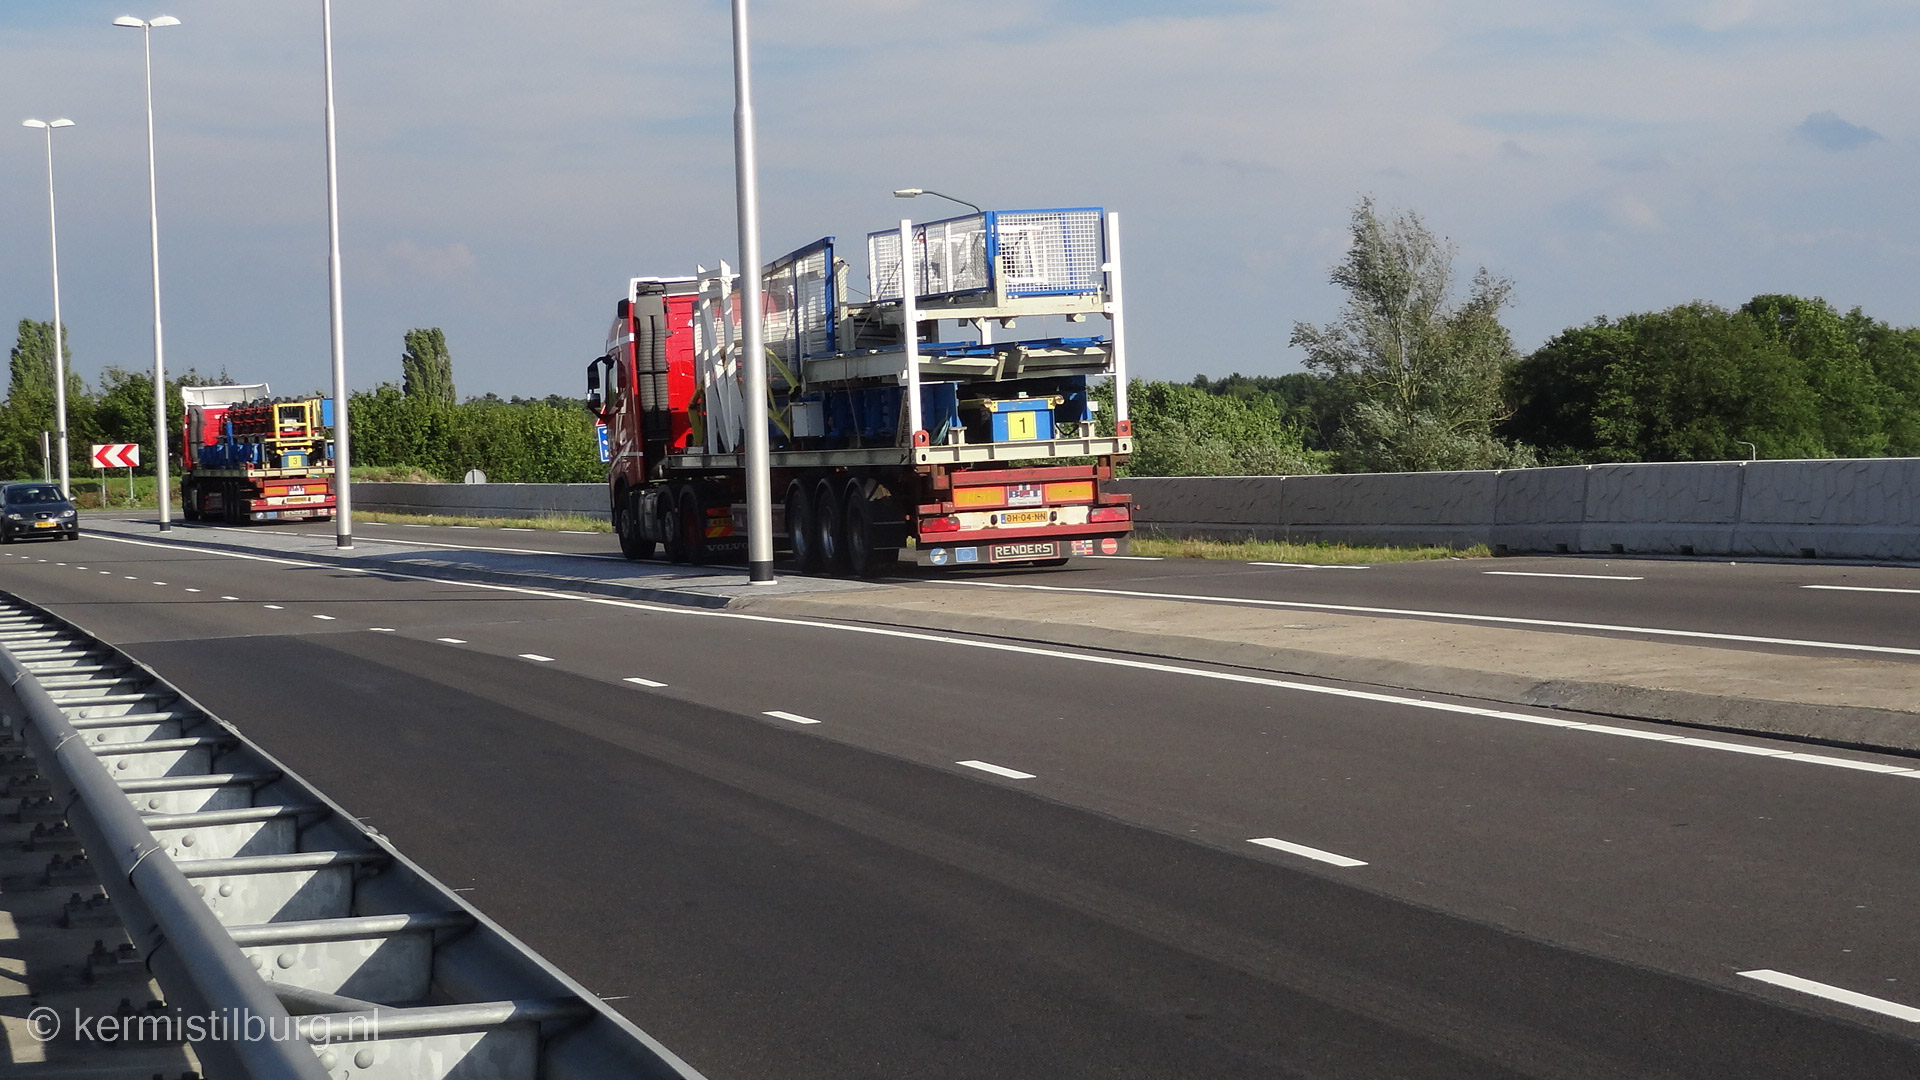 2014, Tilburg, Tilburgse kermis, transport